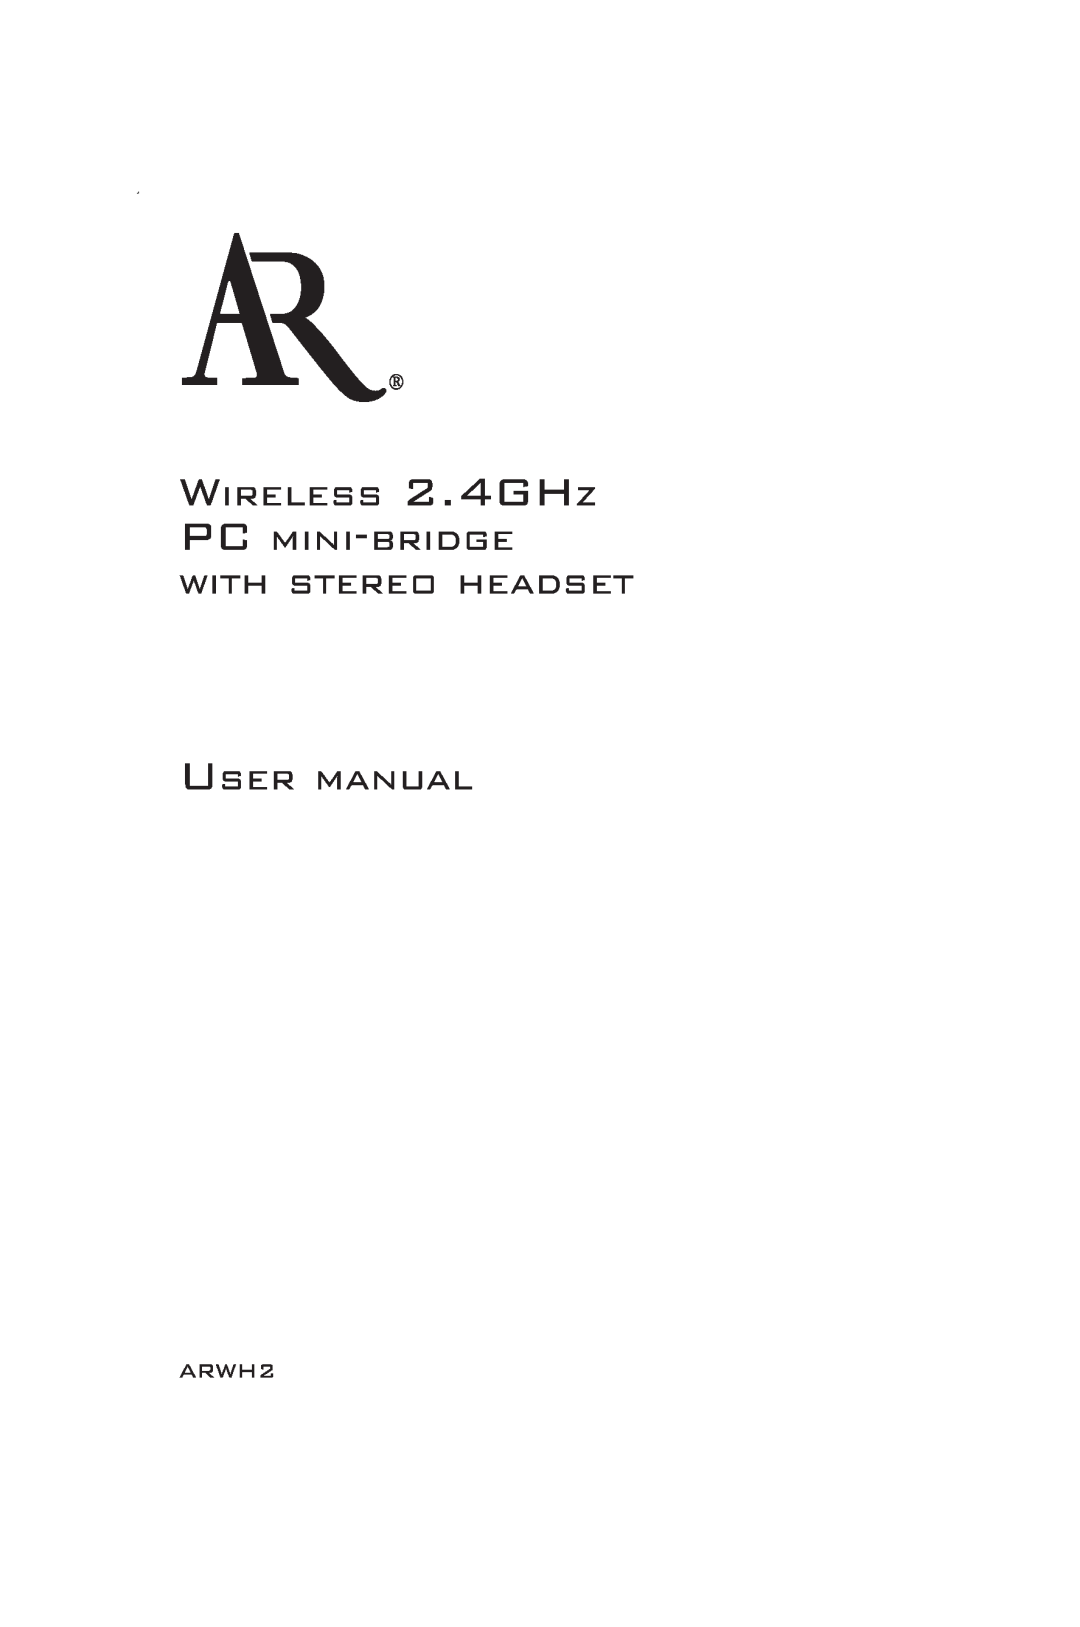 Acoustic Research ARWH2 user manual WIRELESS 2.4GHZ PC MINI-BRIDGE 